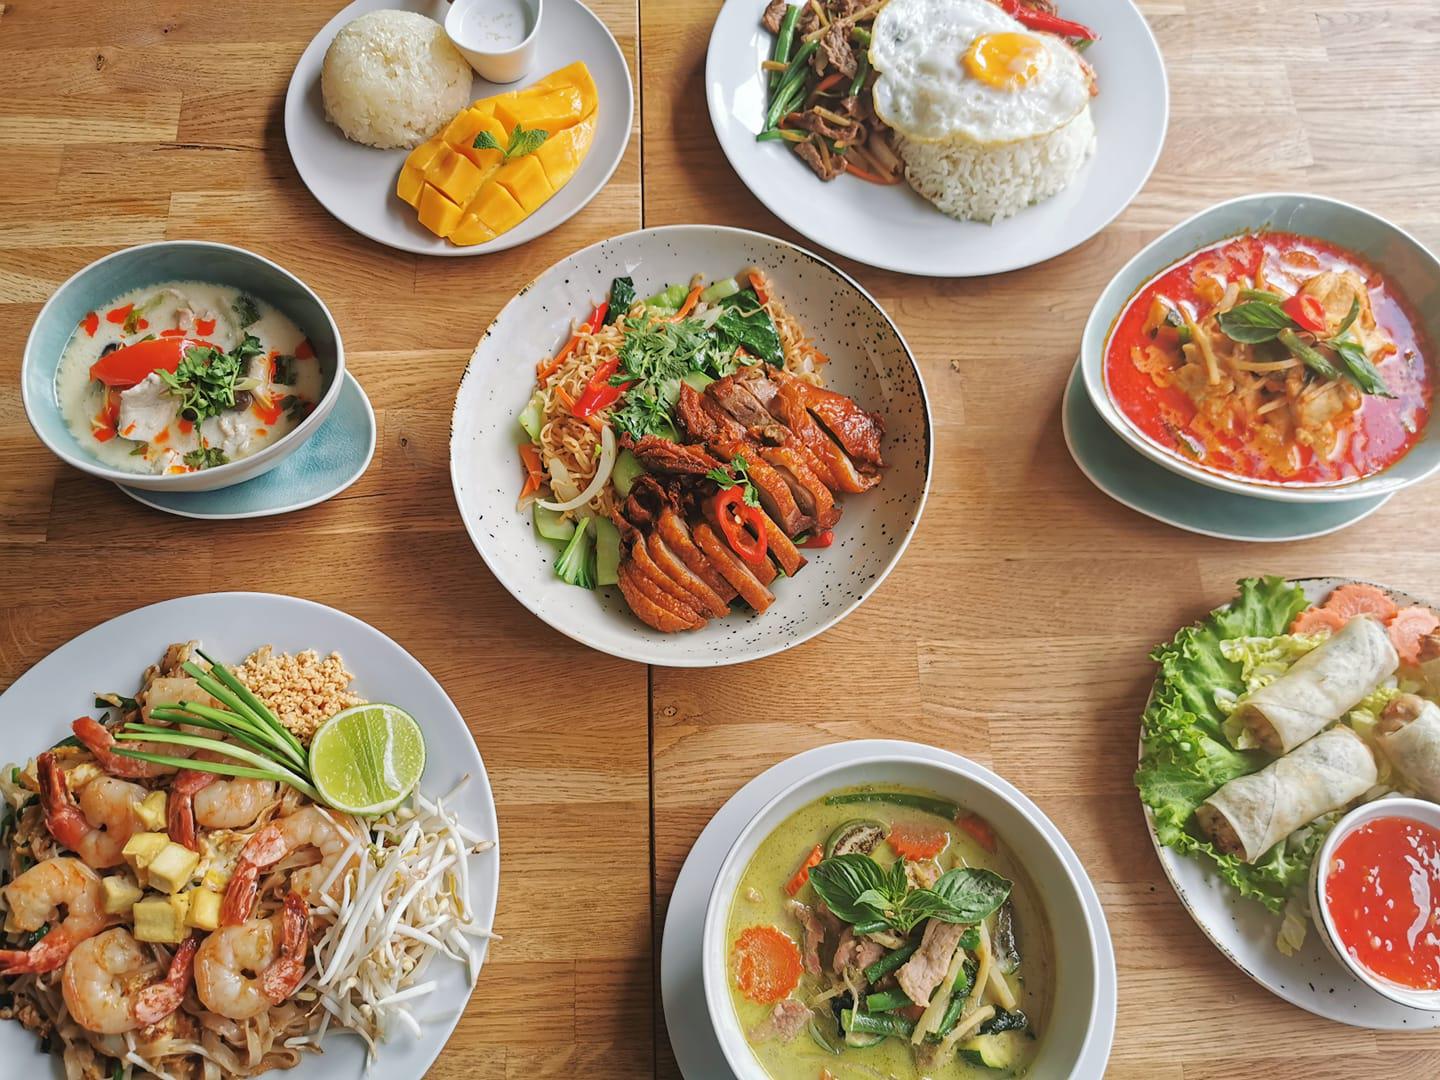 Bilder LeBua thai restaurant